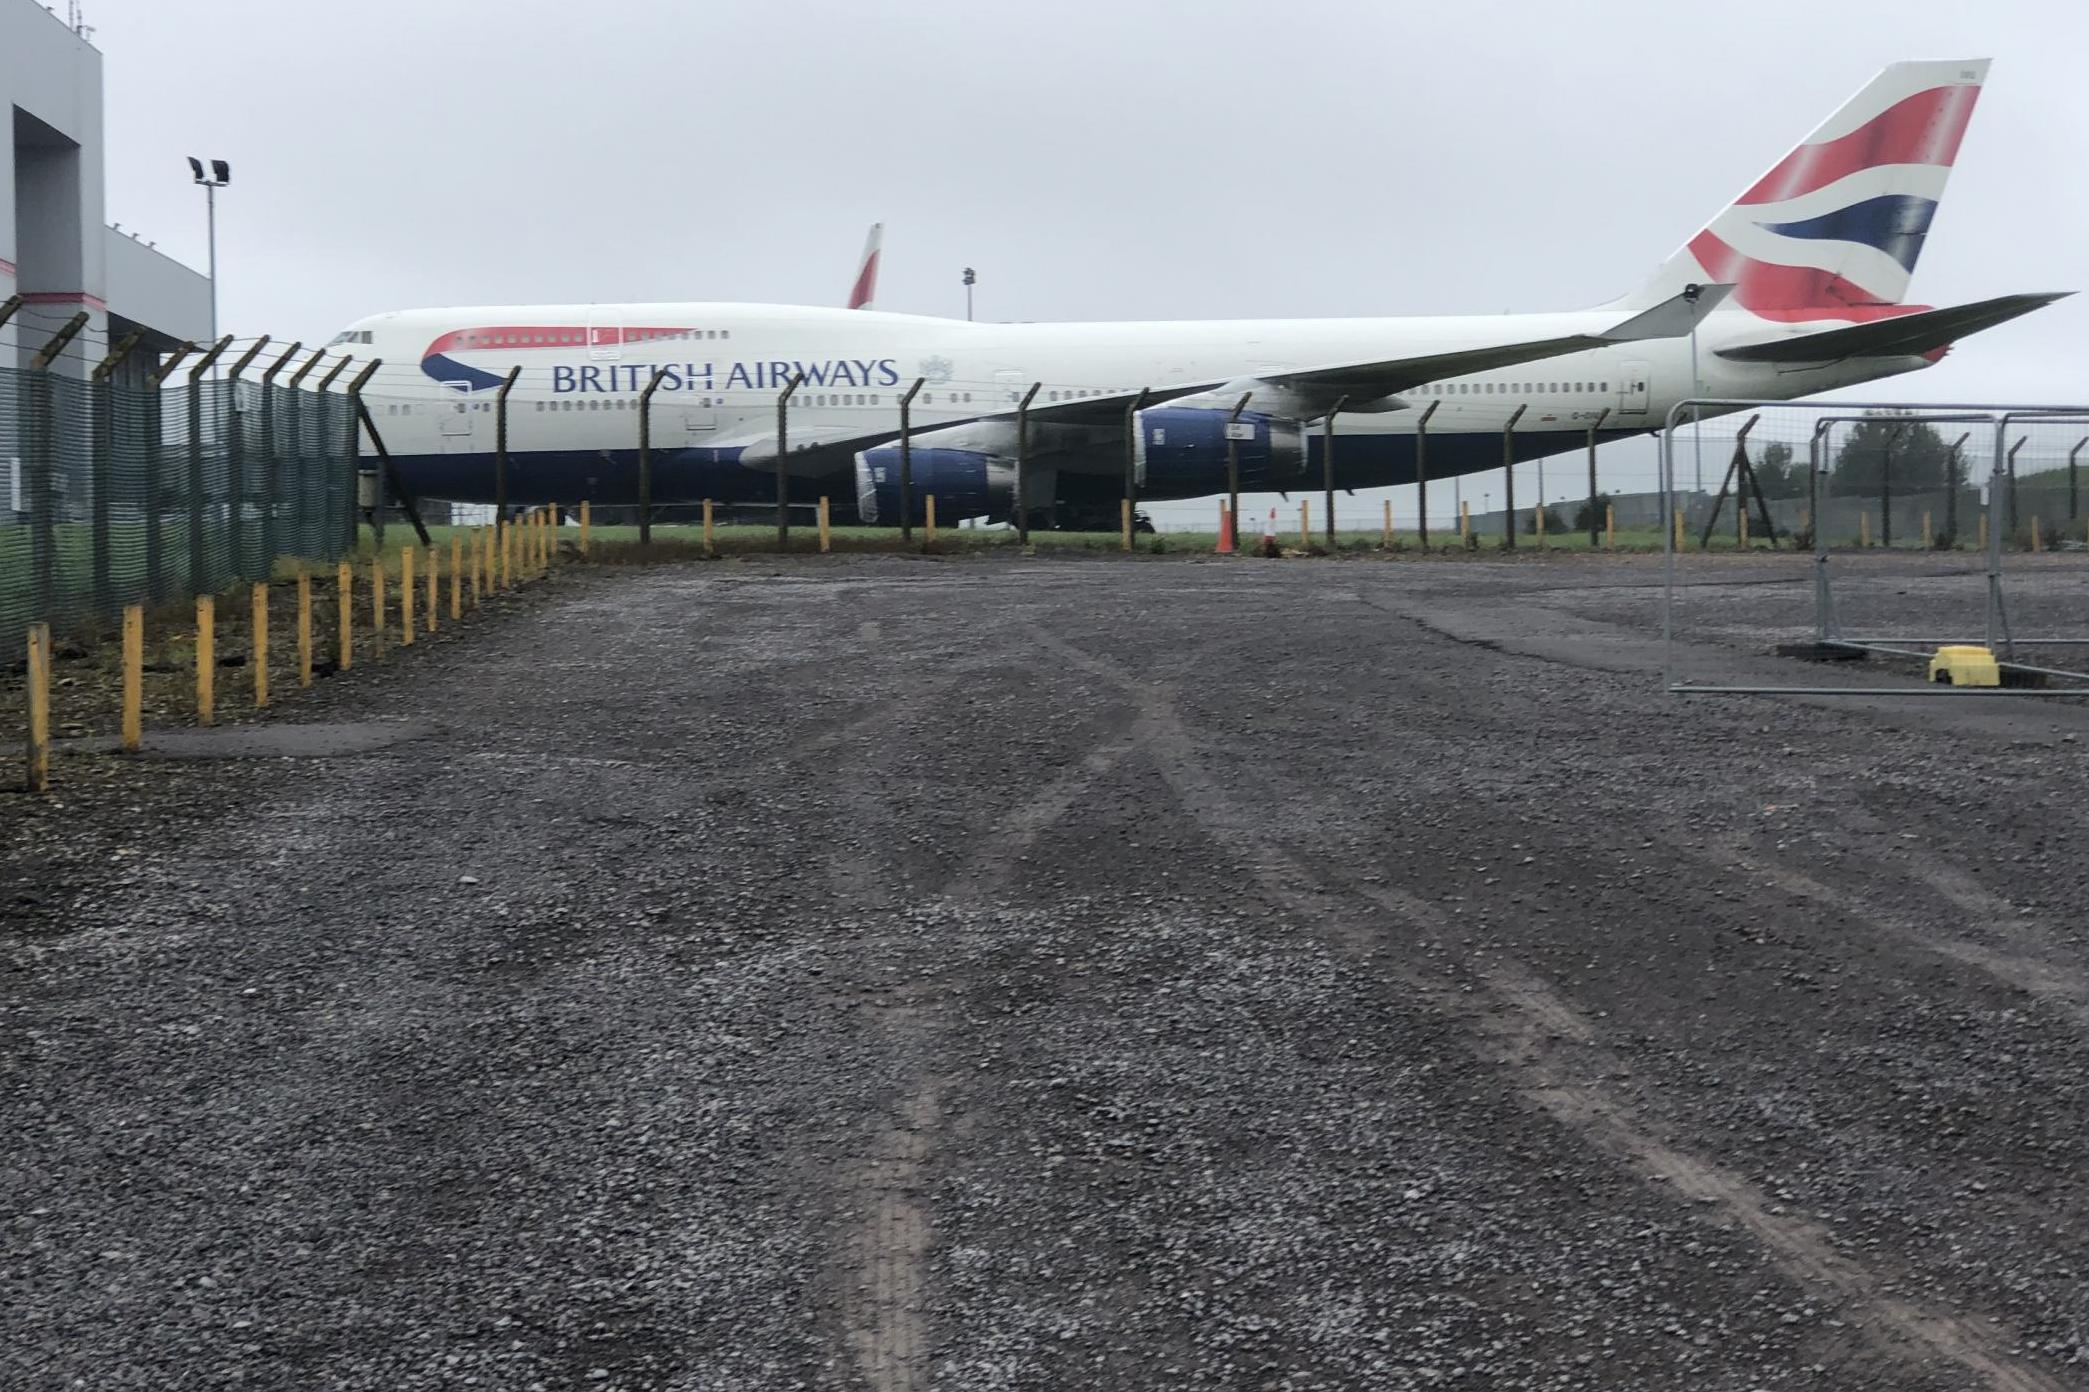 Ground stop: a British Airways Boeing 747 at Cardiff airport